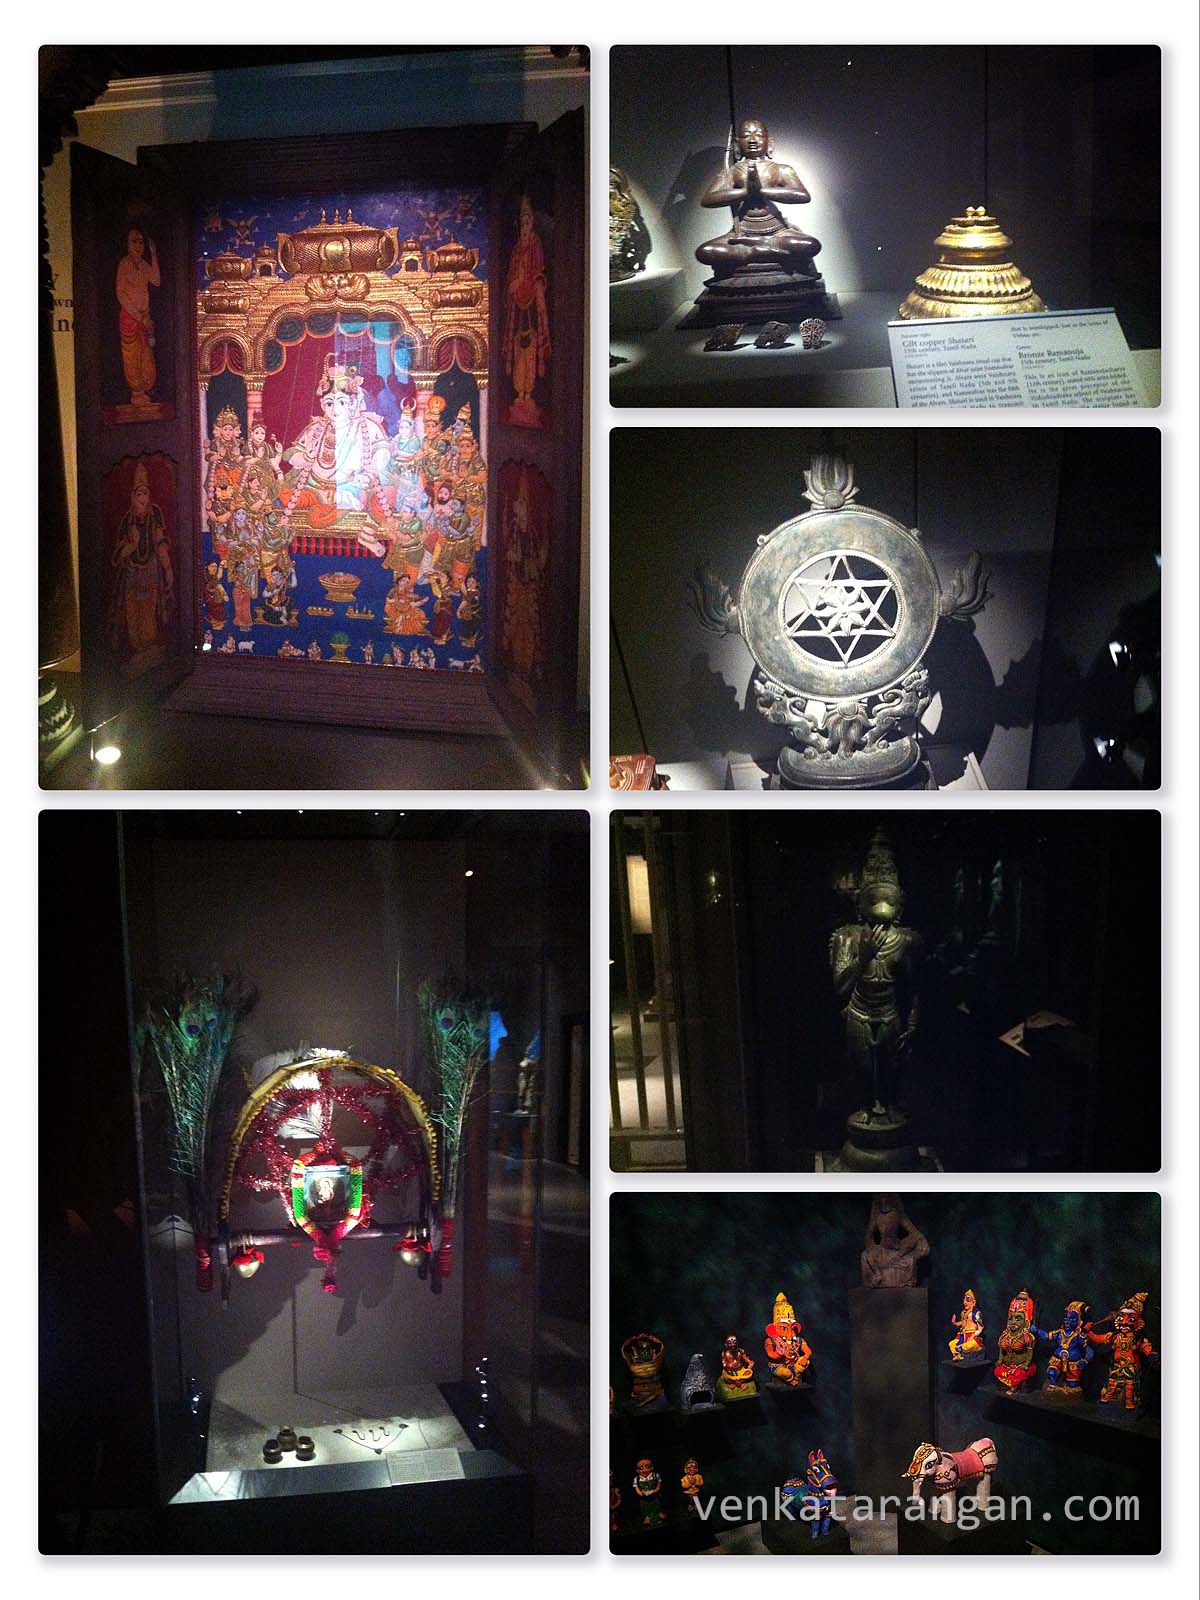 Display of paintings and models of various Hindu Gods and Symbols.